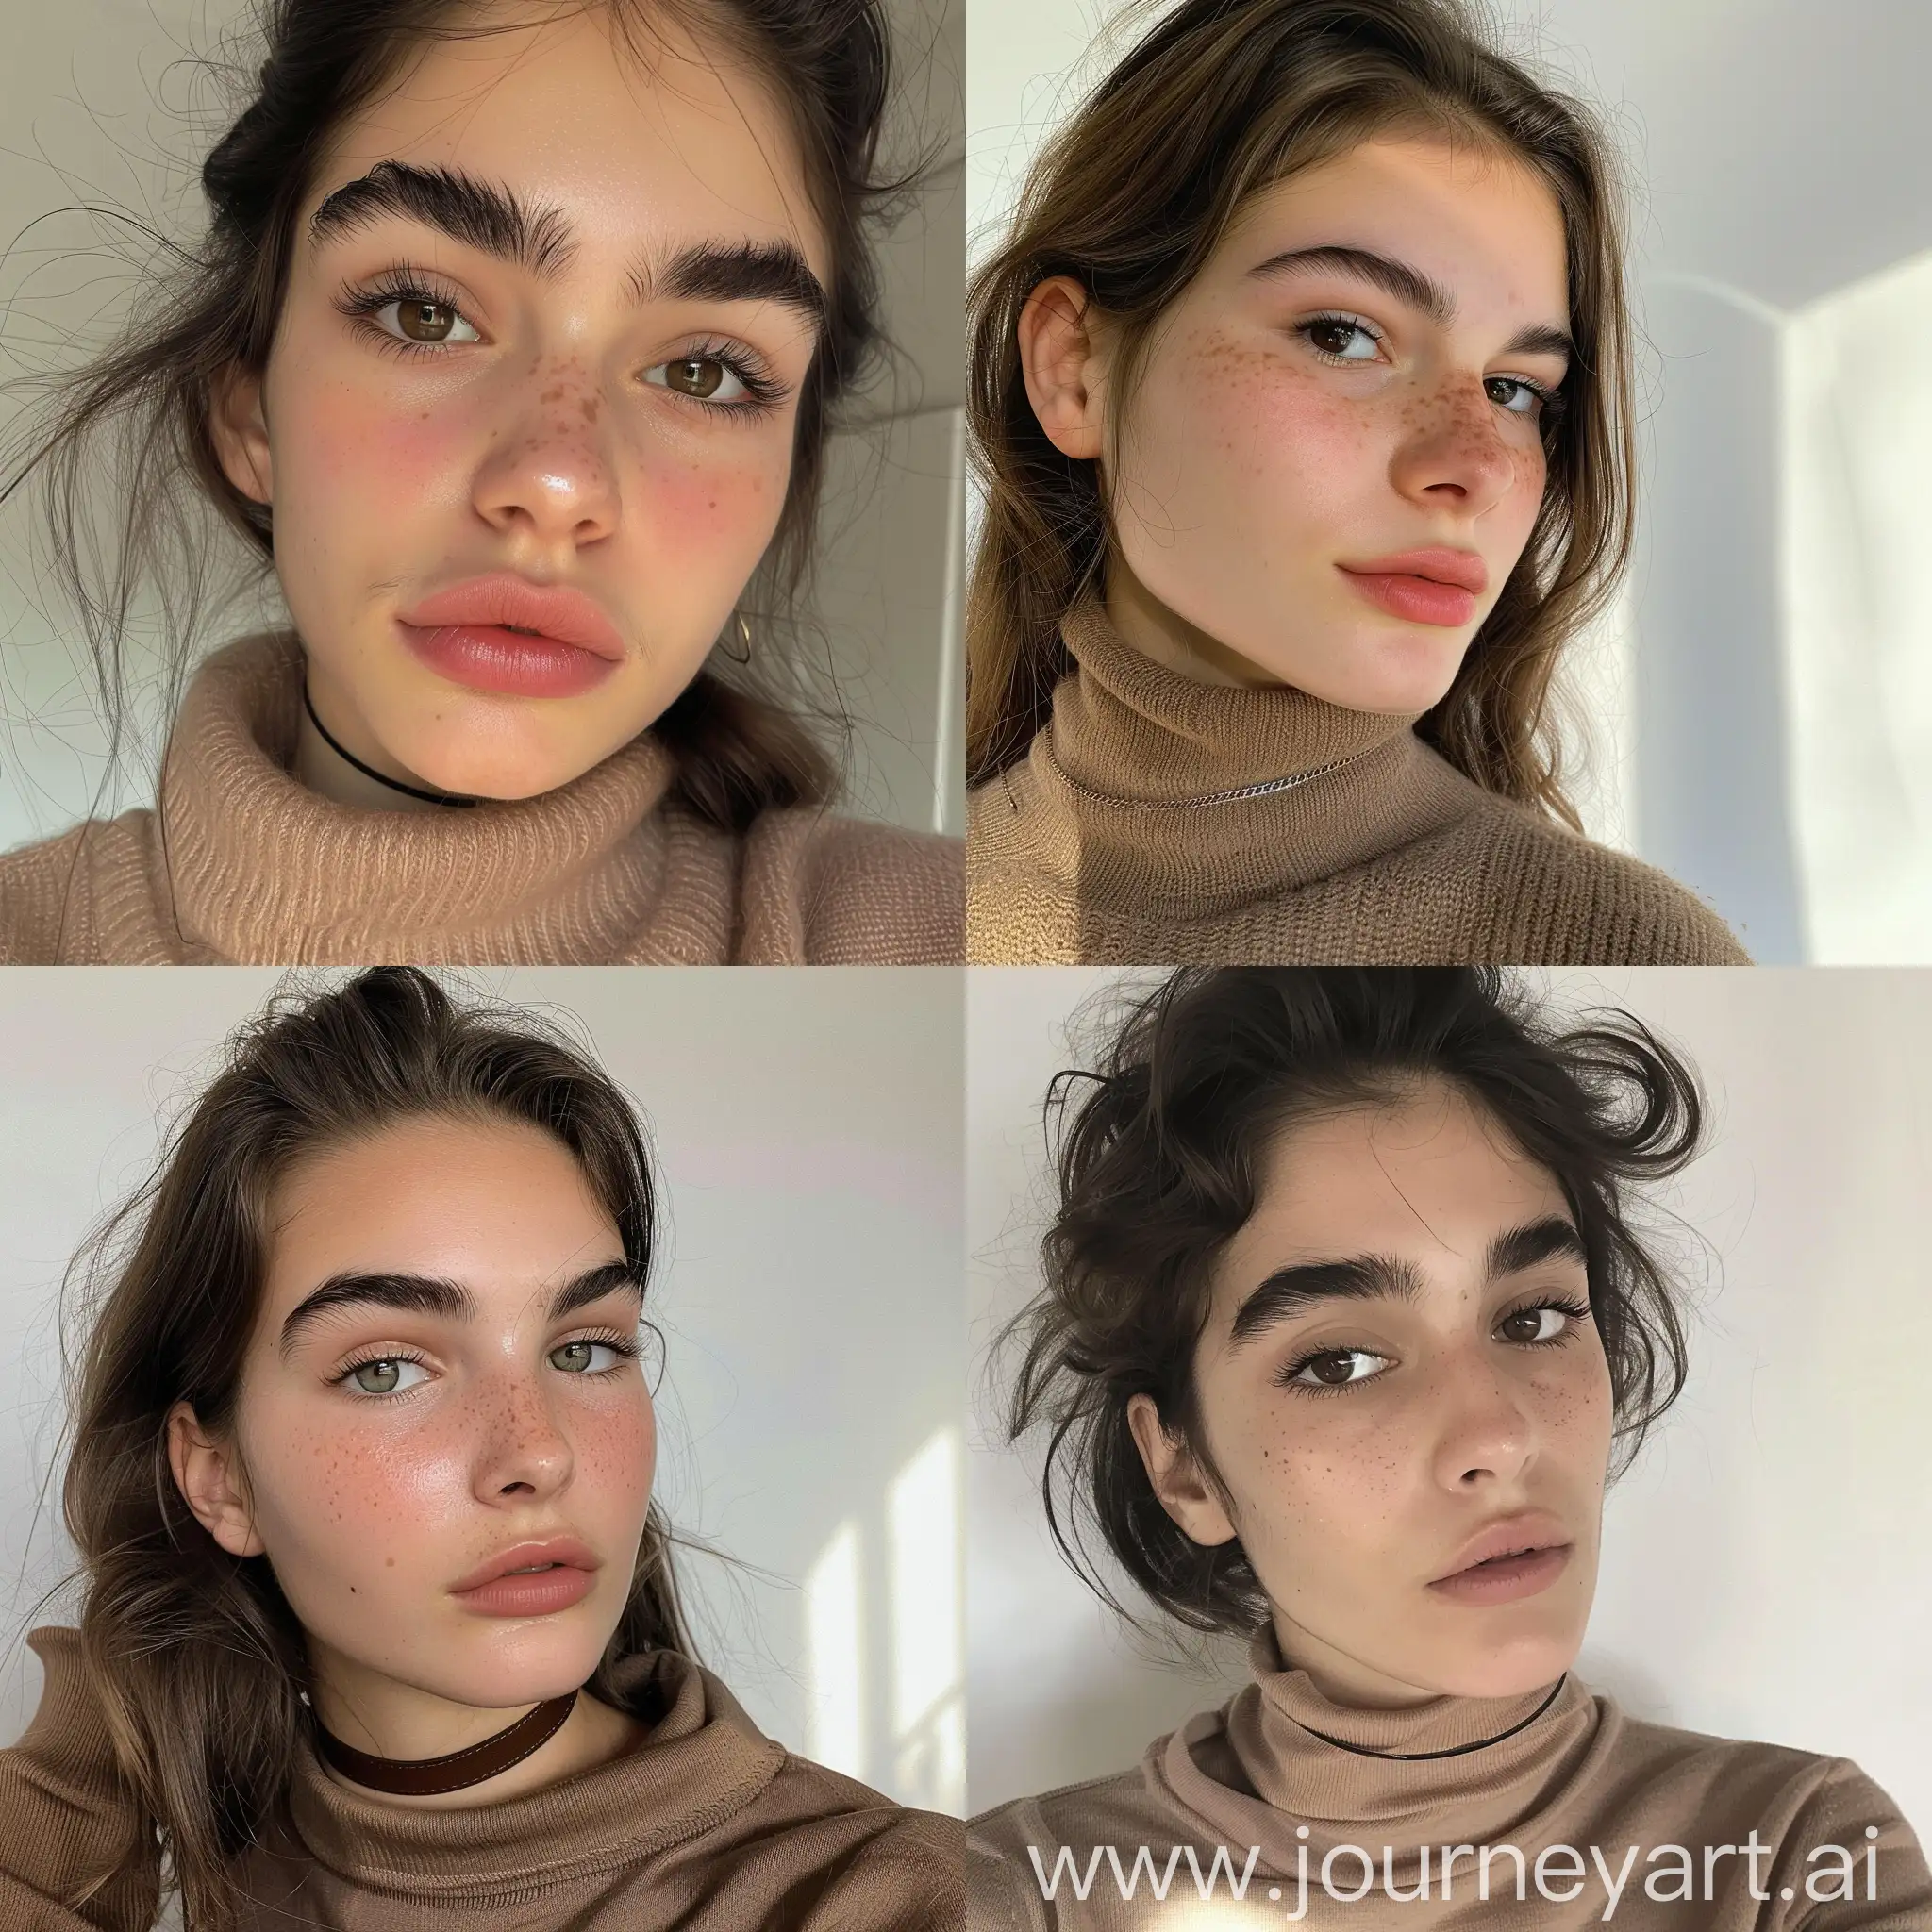 Jewish-Teenage-Girl-with-Bushy-Eyebrows-and-Choker-Aesthetic-Instagram-Selfie-in-Soft-Brown-Tones